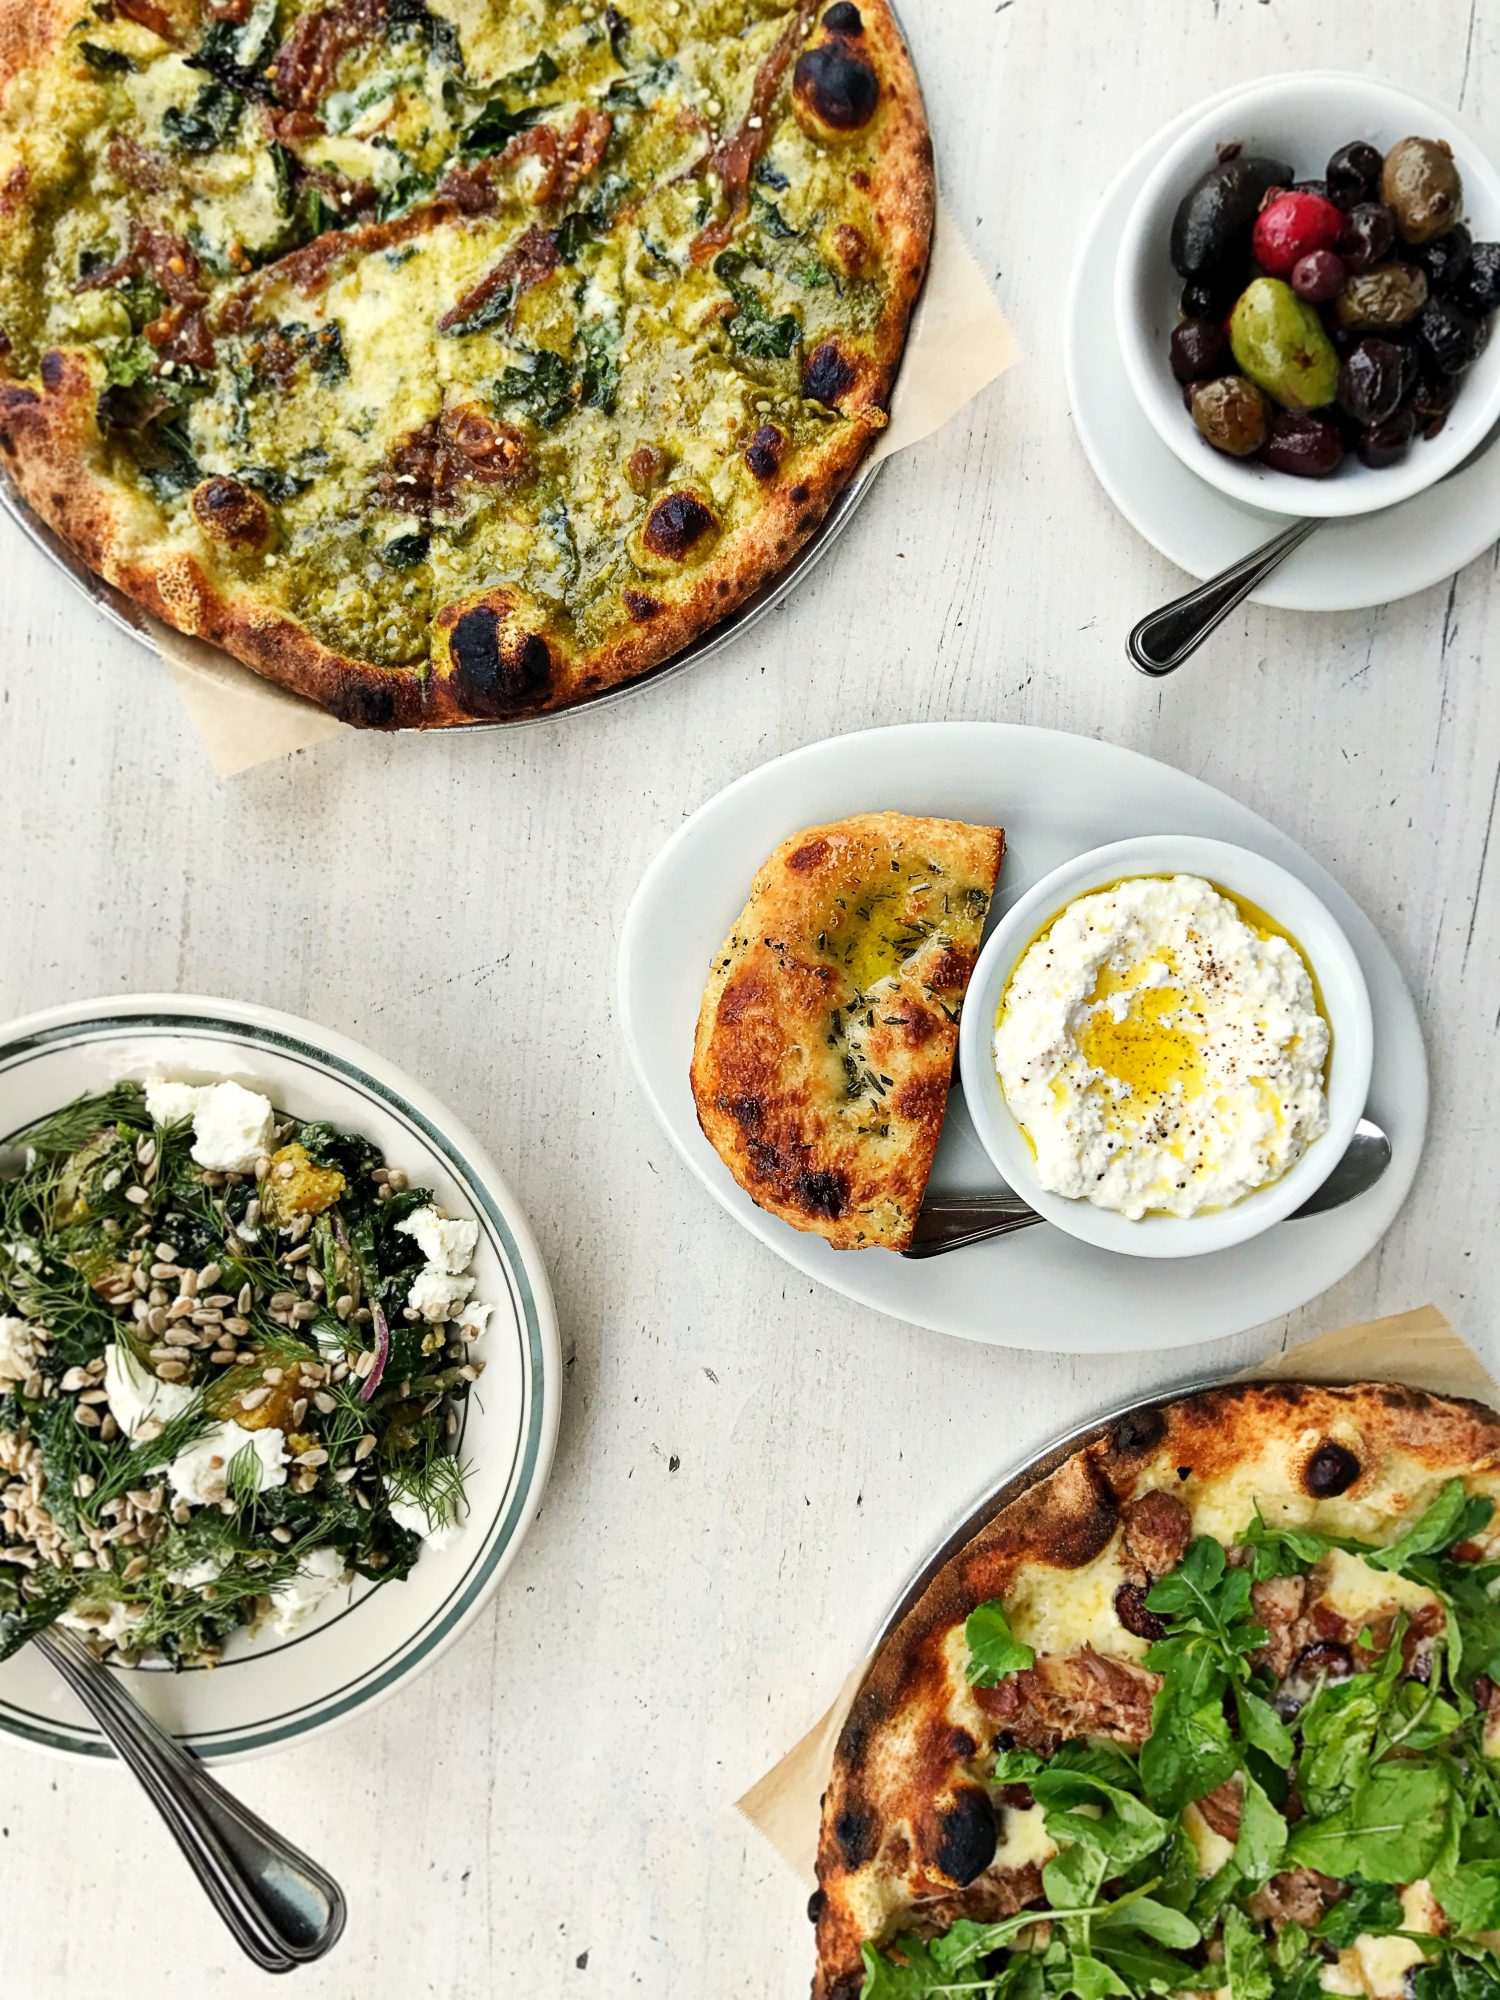 Kale and pork pizzas, kale salad, olives, ricotta overhead